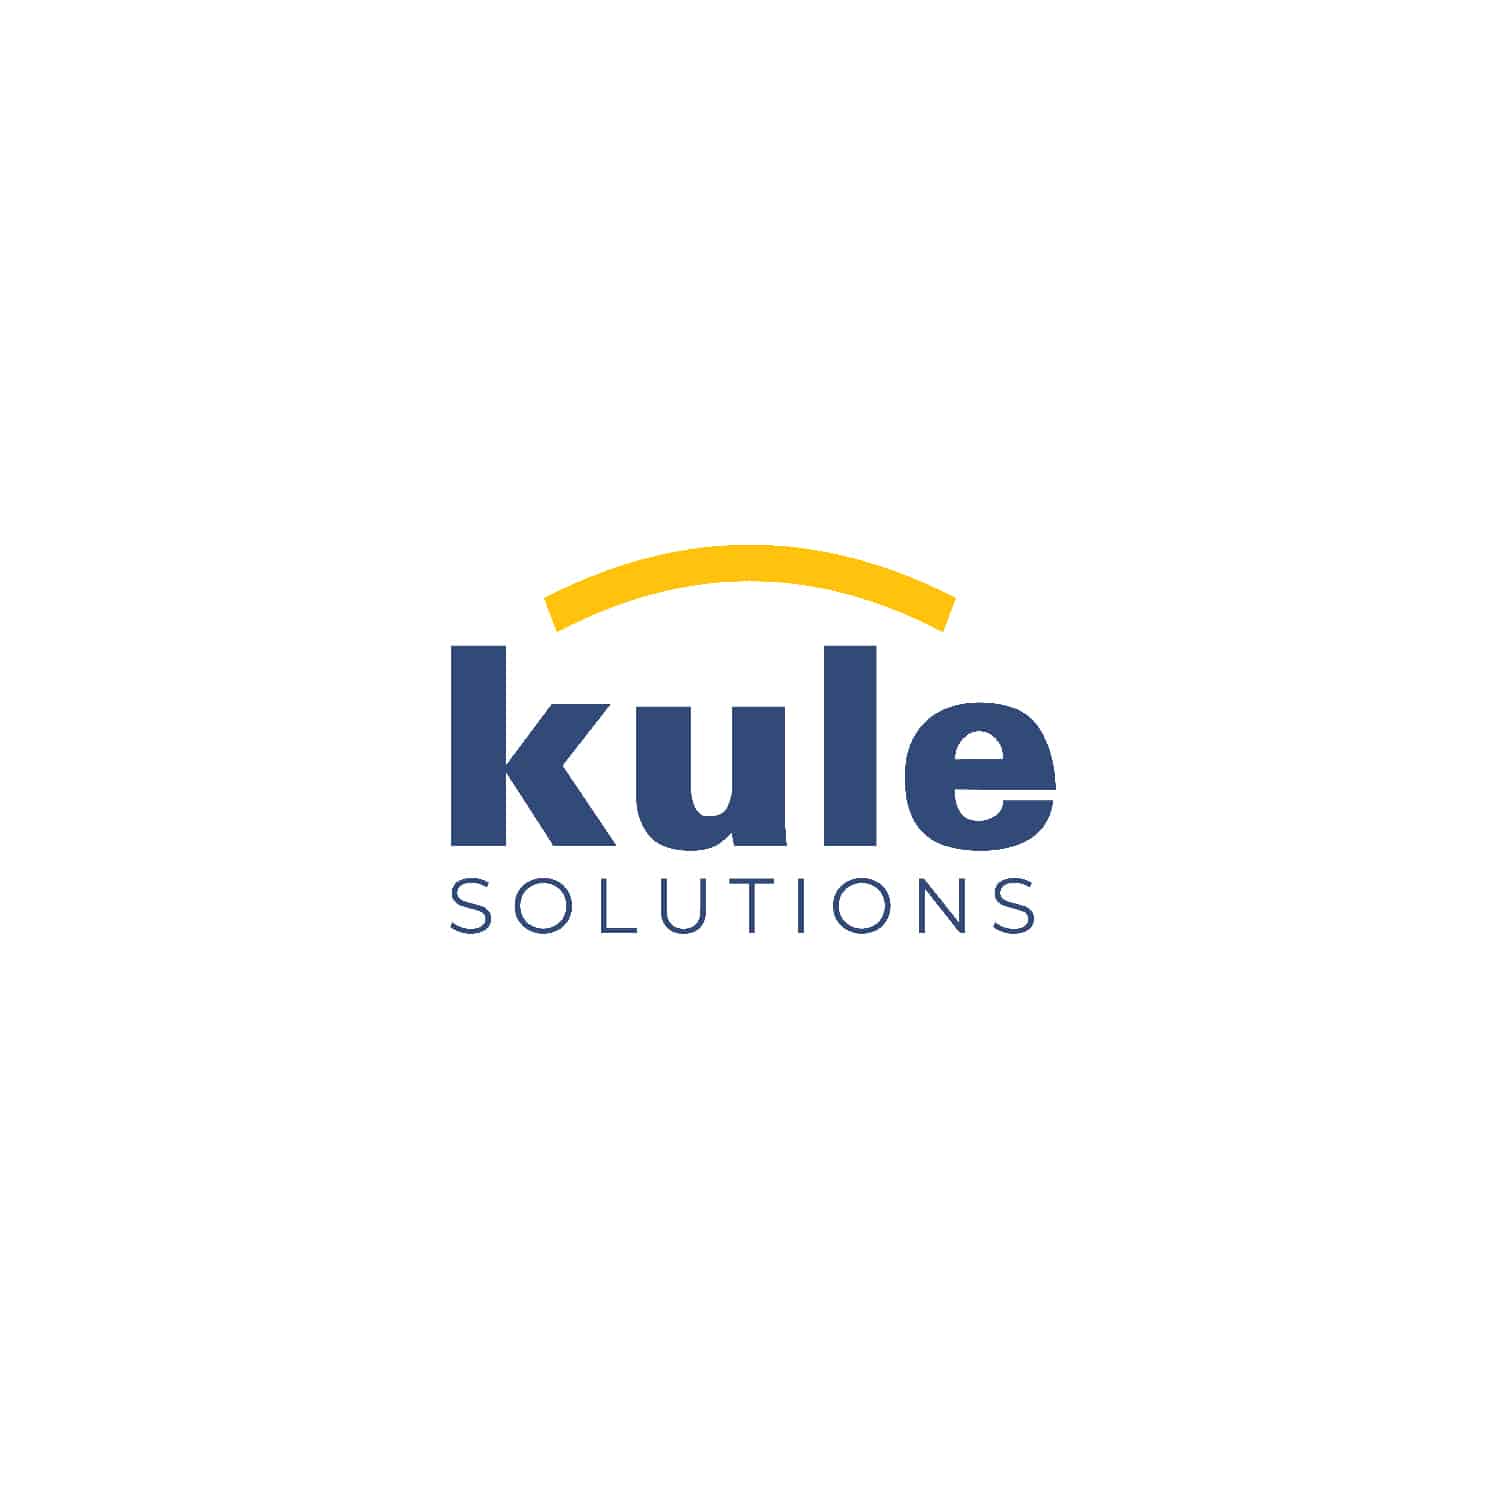 https://horizonplus.eu/project/kule-solutions/